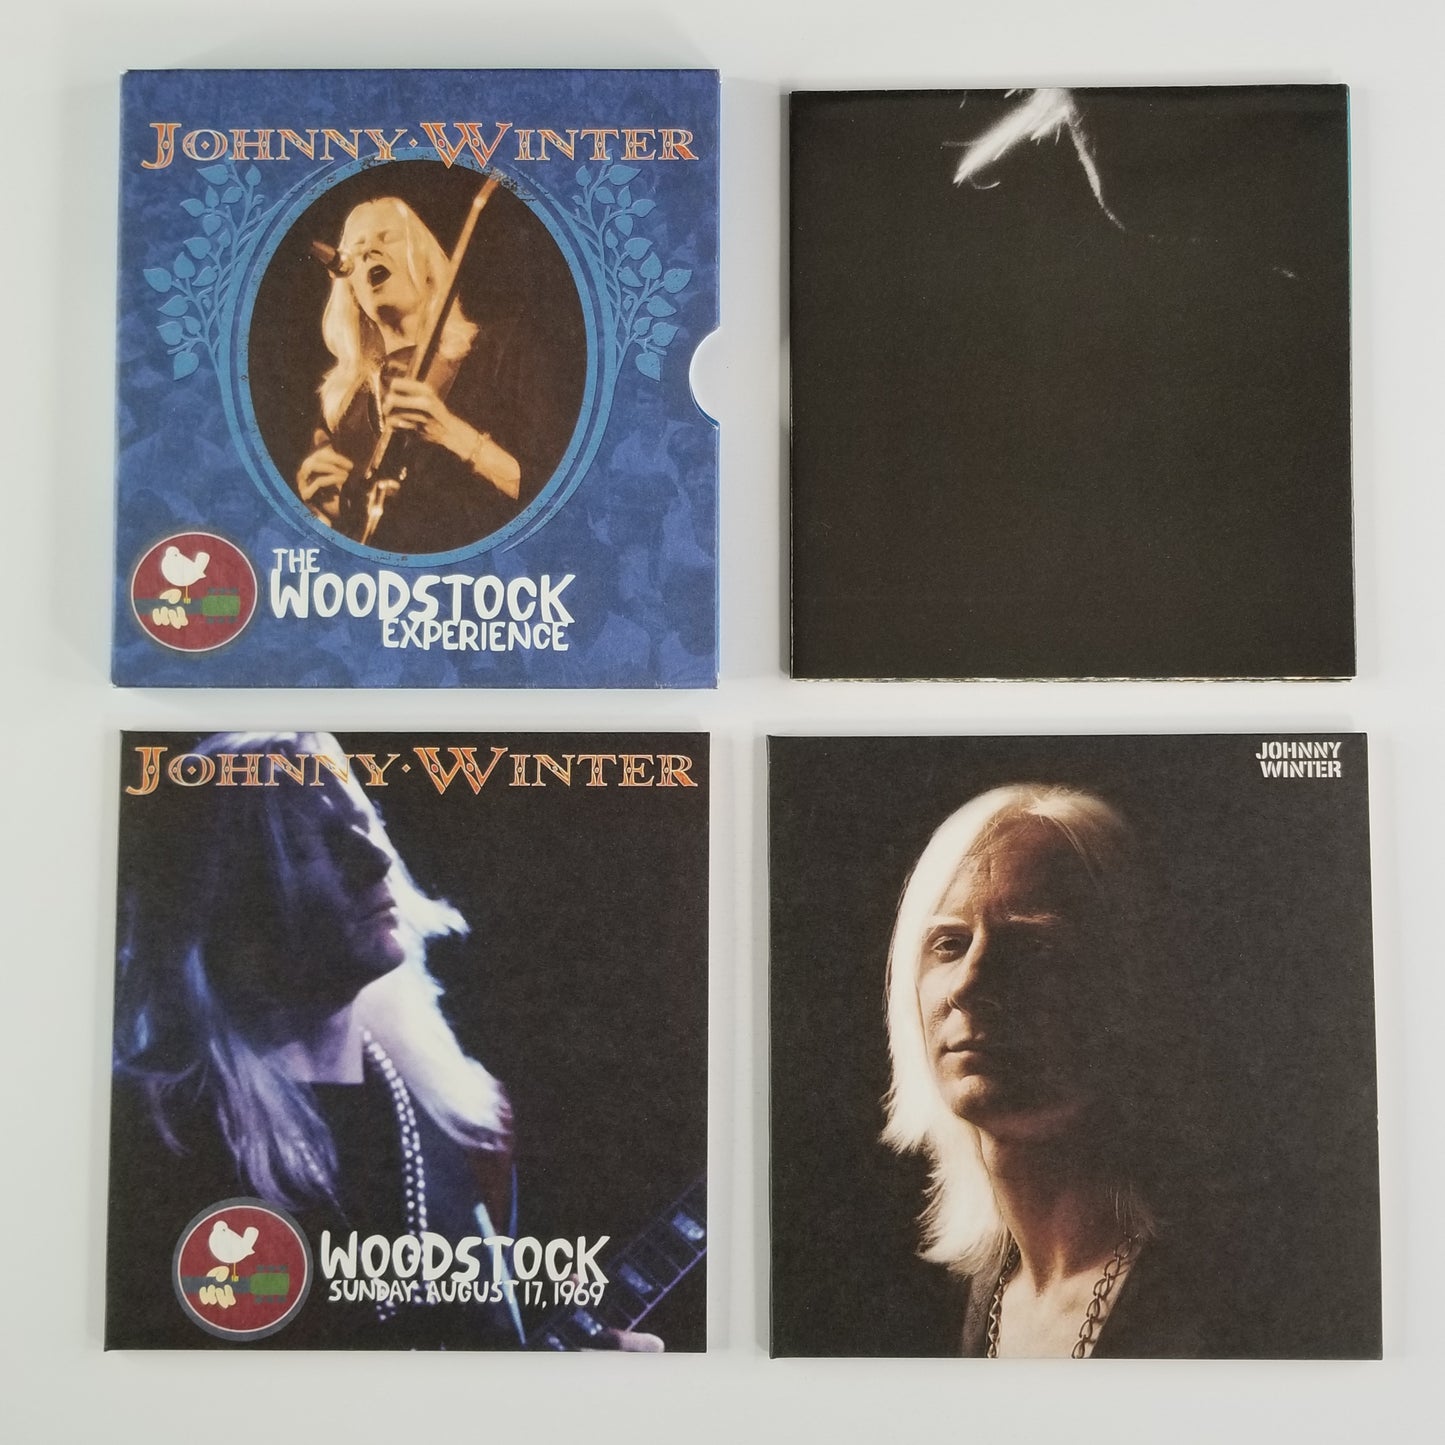 Johnny Winter – The Woodstock Experience (2009, 2x CD Set) 88697 48244 2